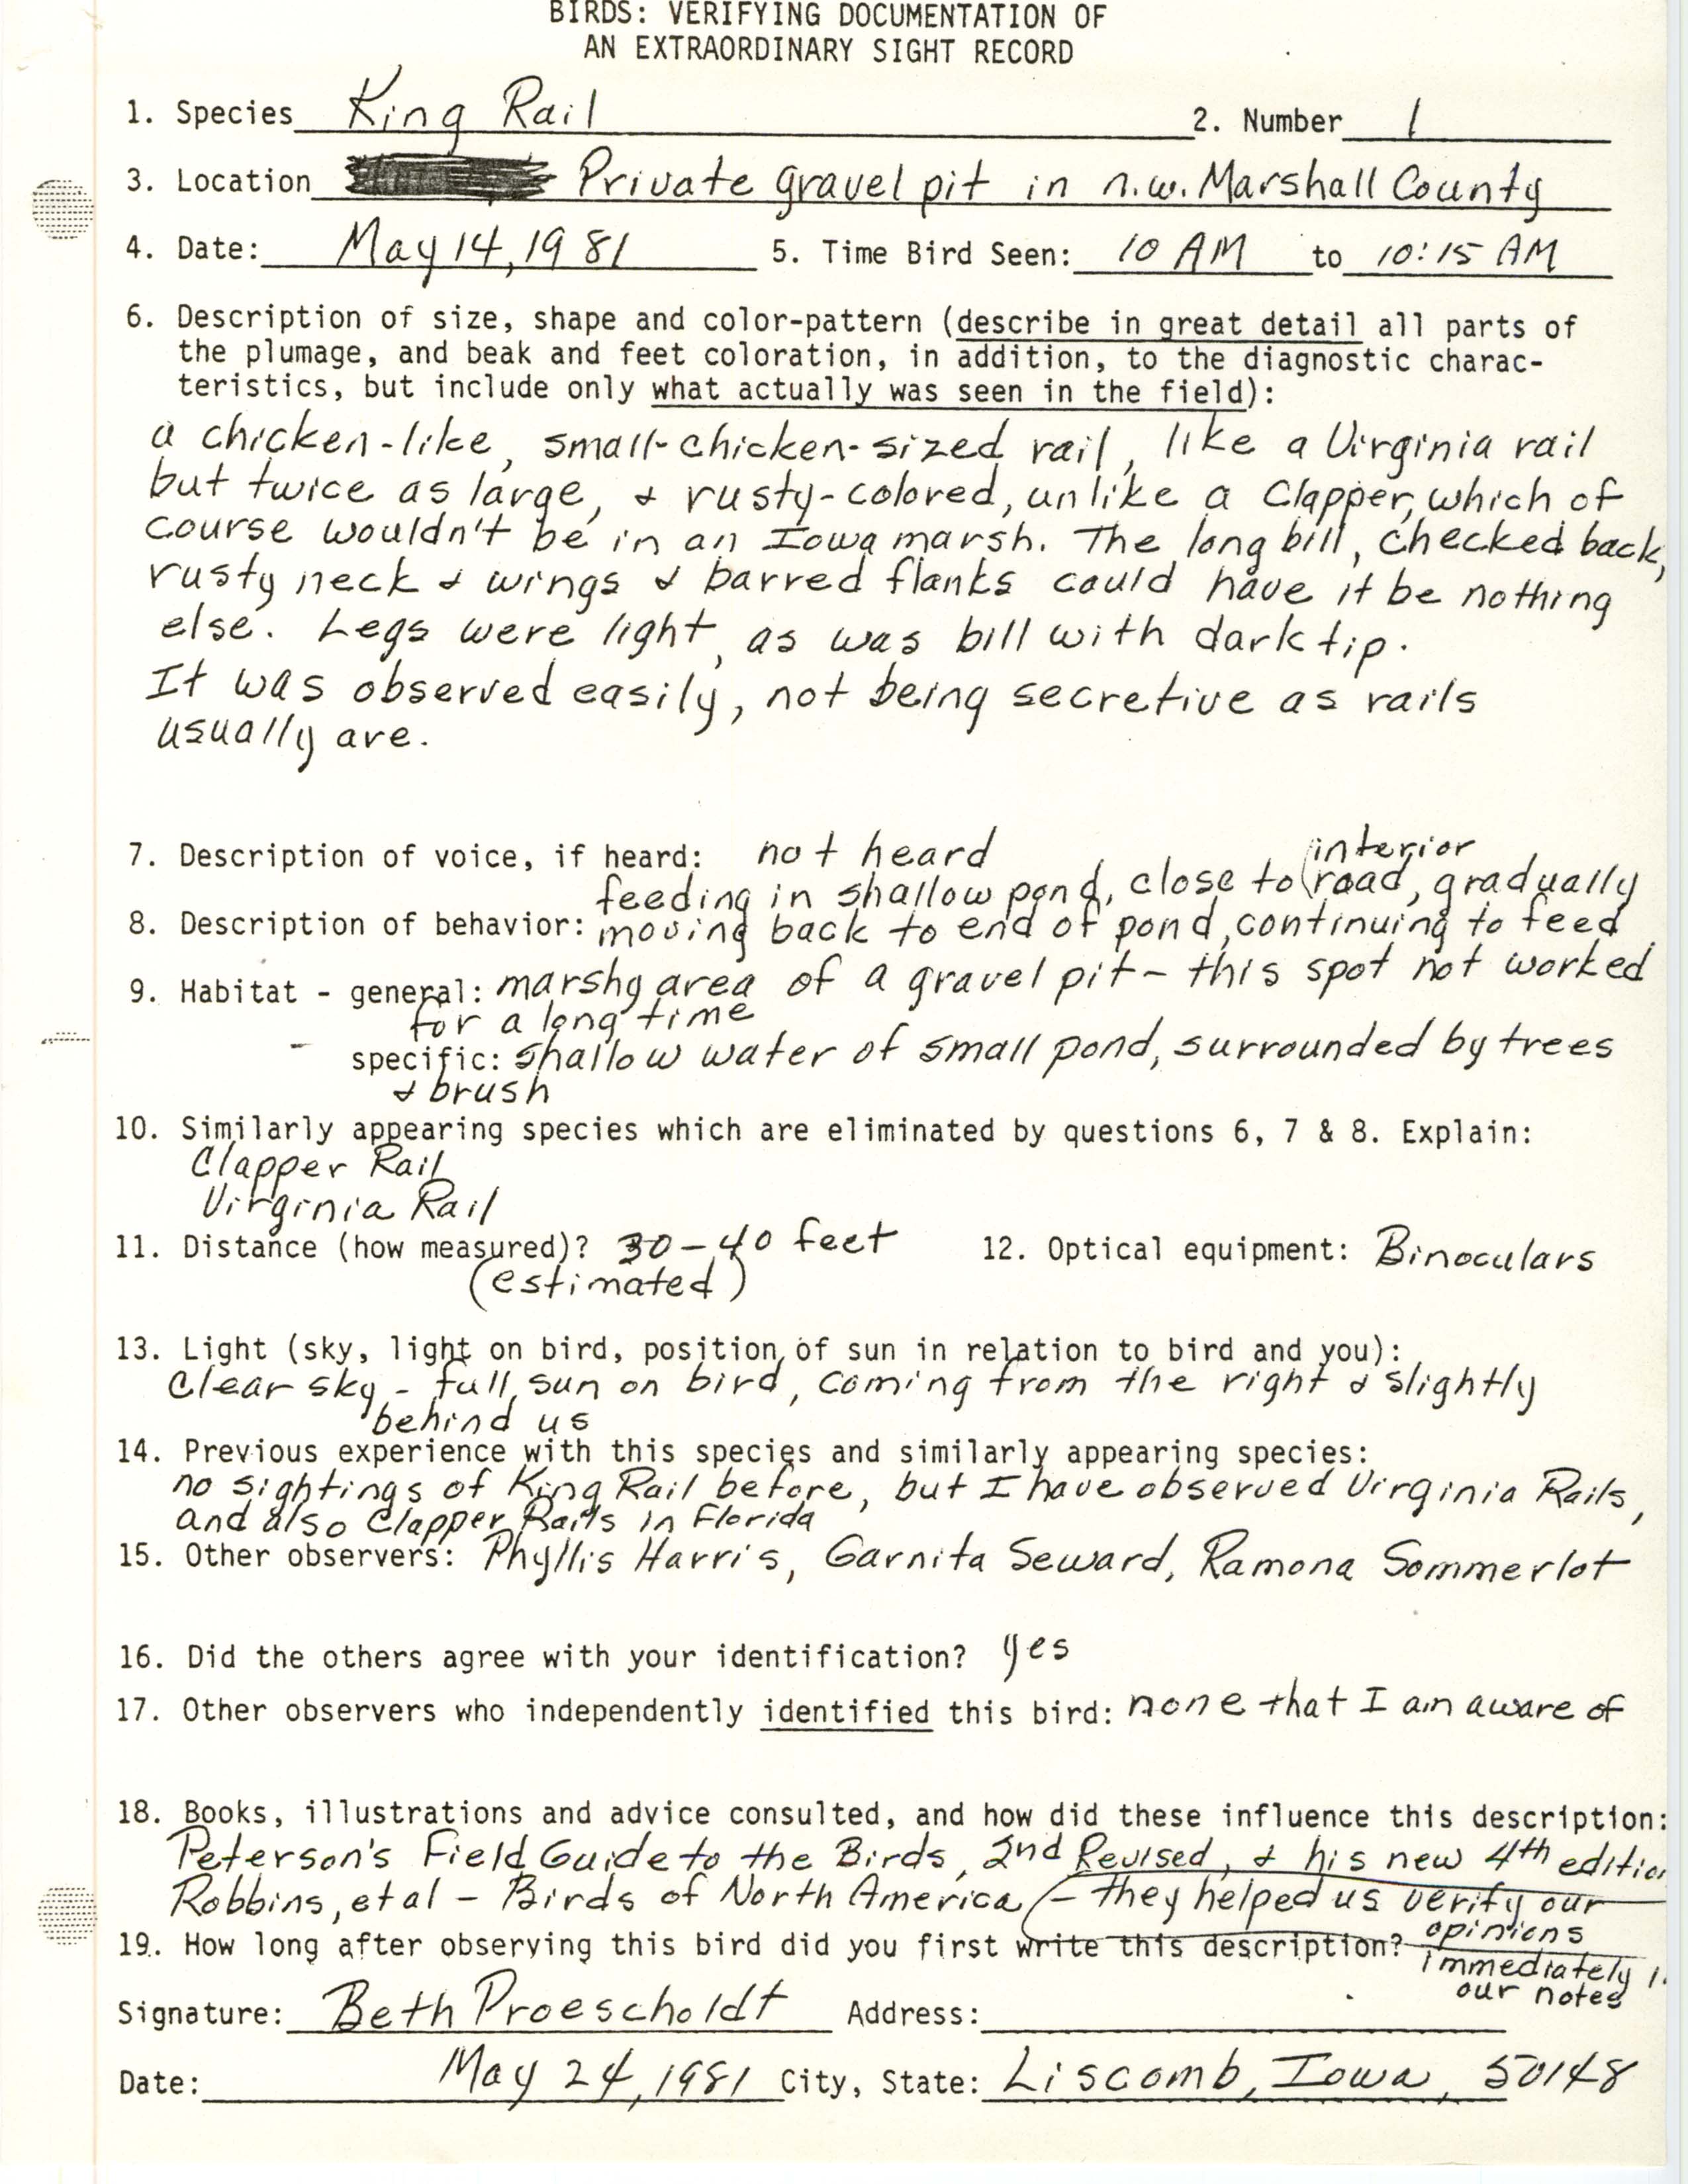 Rare bird documentation form for King Rail in northwest Marshall County, 1981